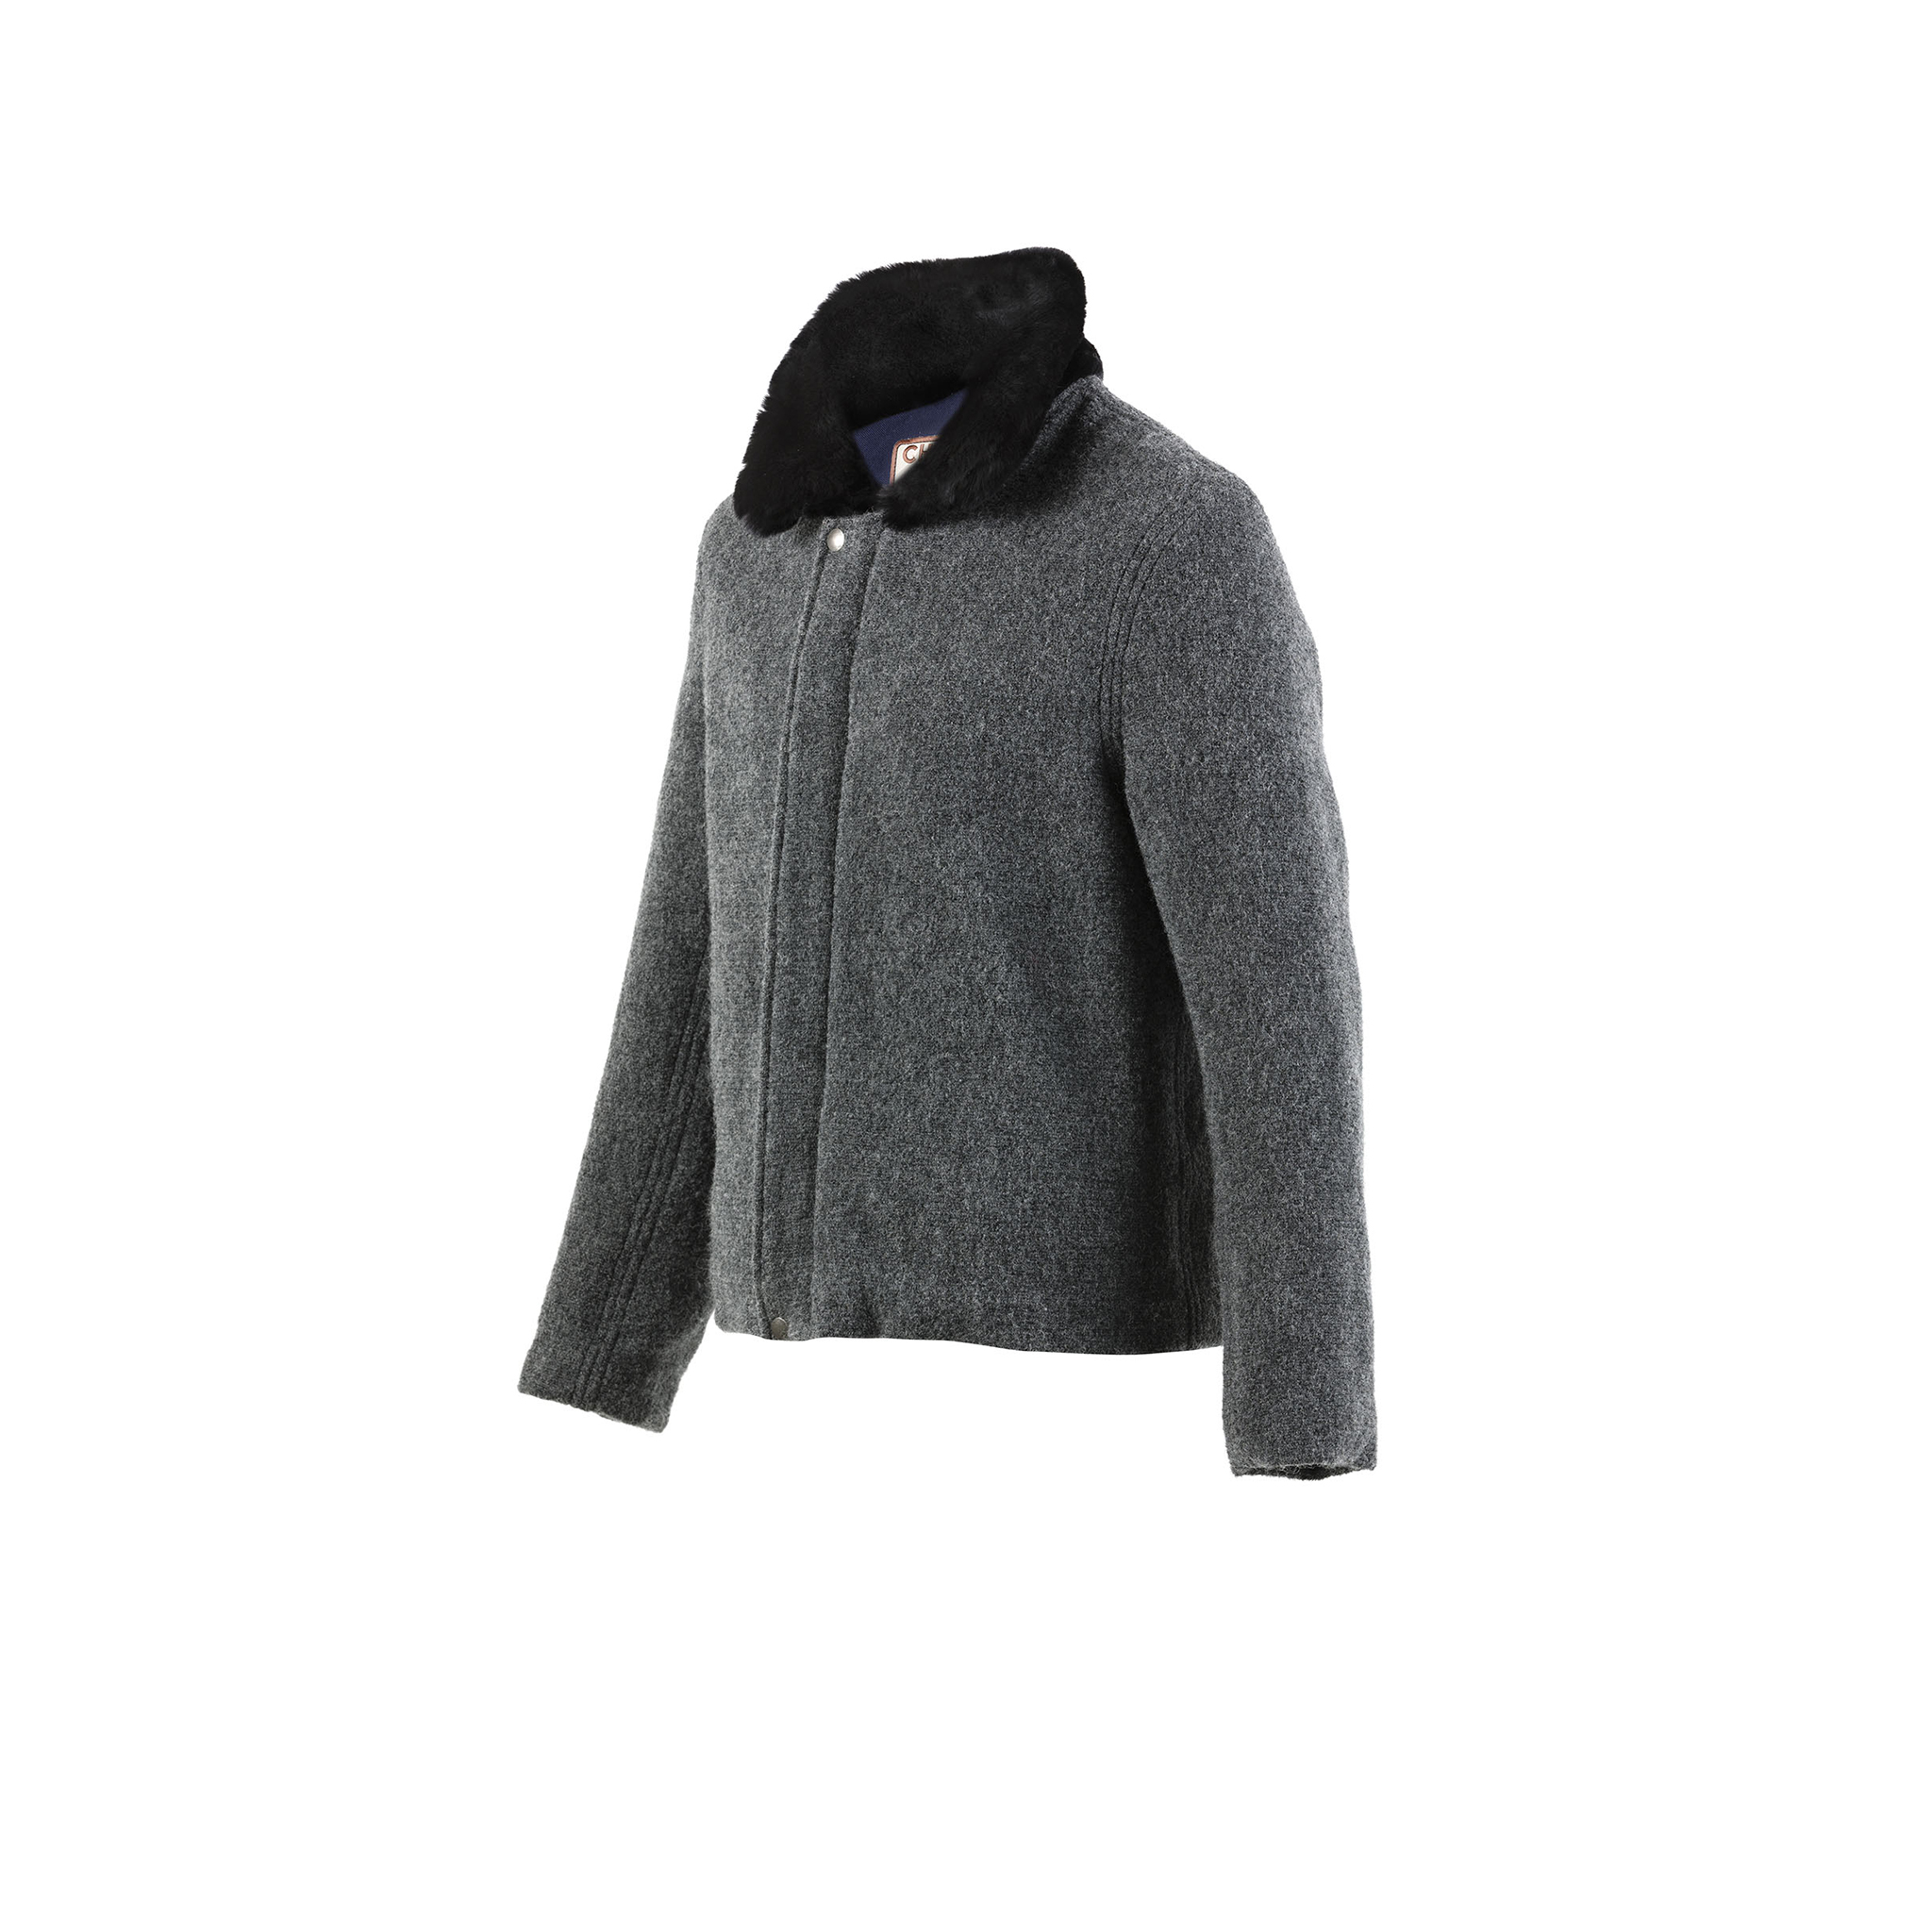 Bomber Jacket - Merino wool - Grey color